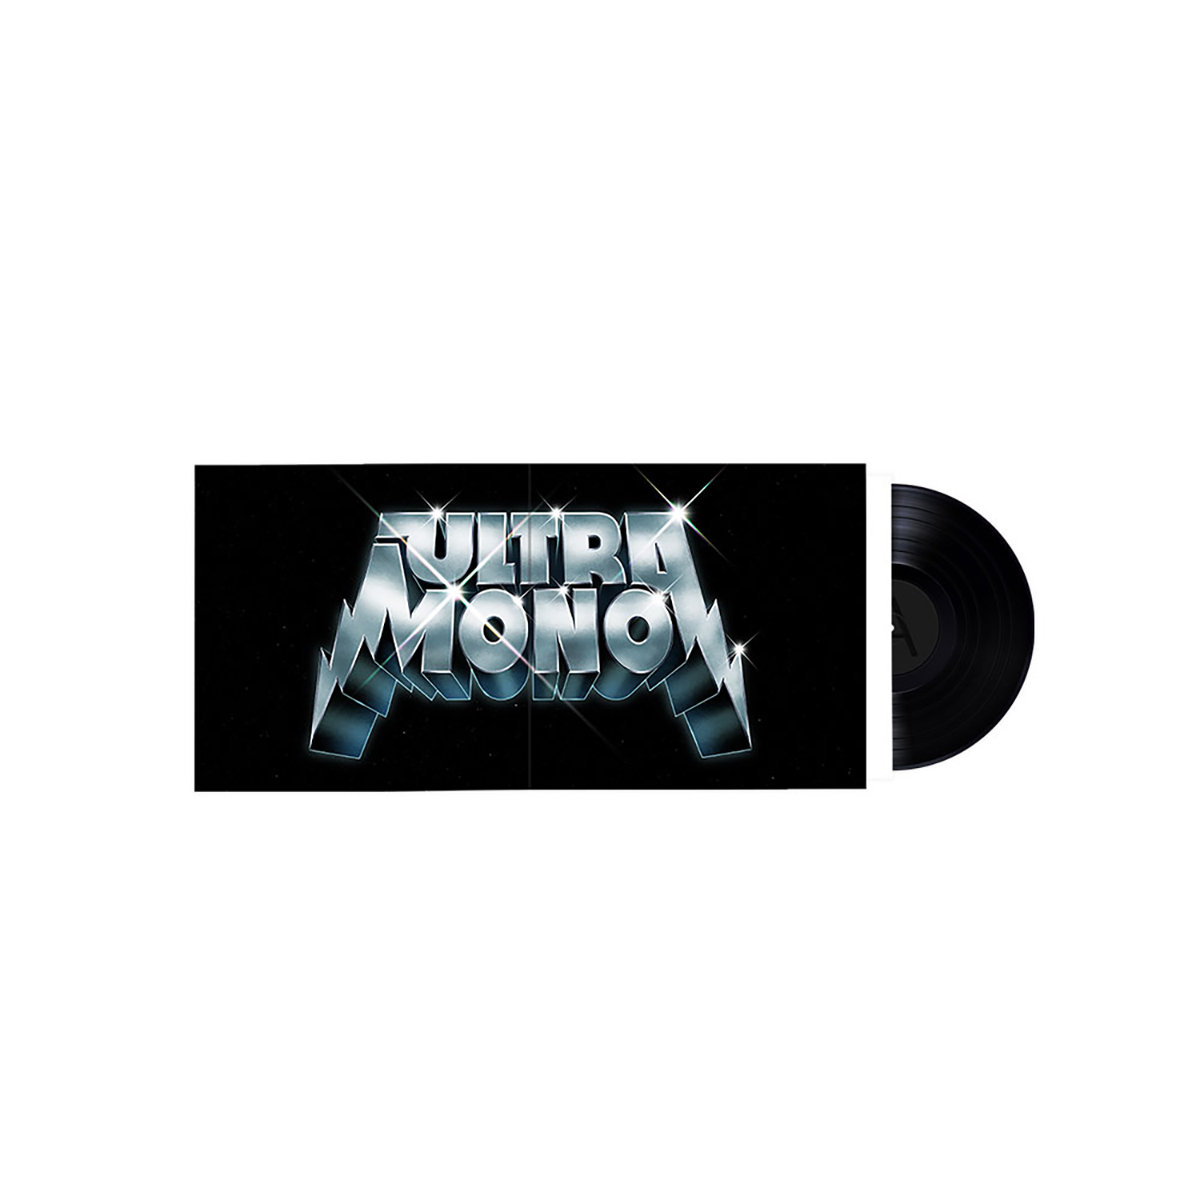 Idles "Ultra Mono" LP Deluxe